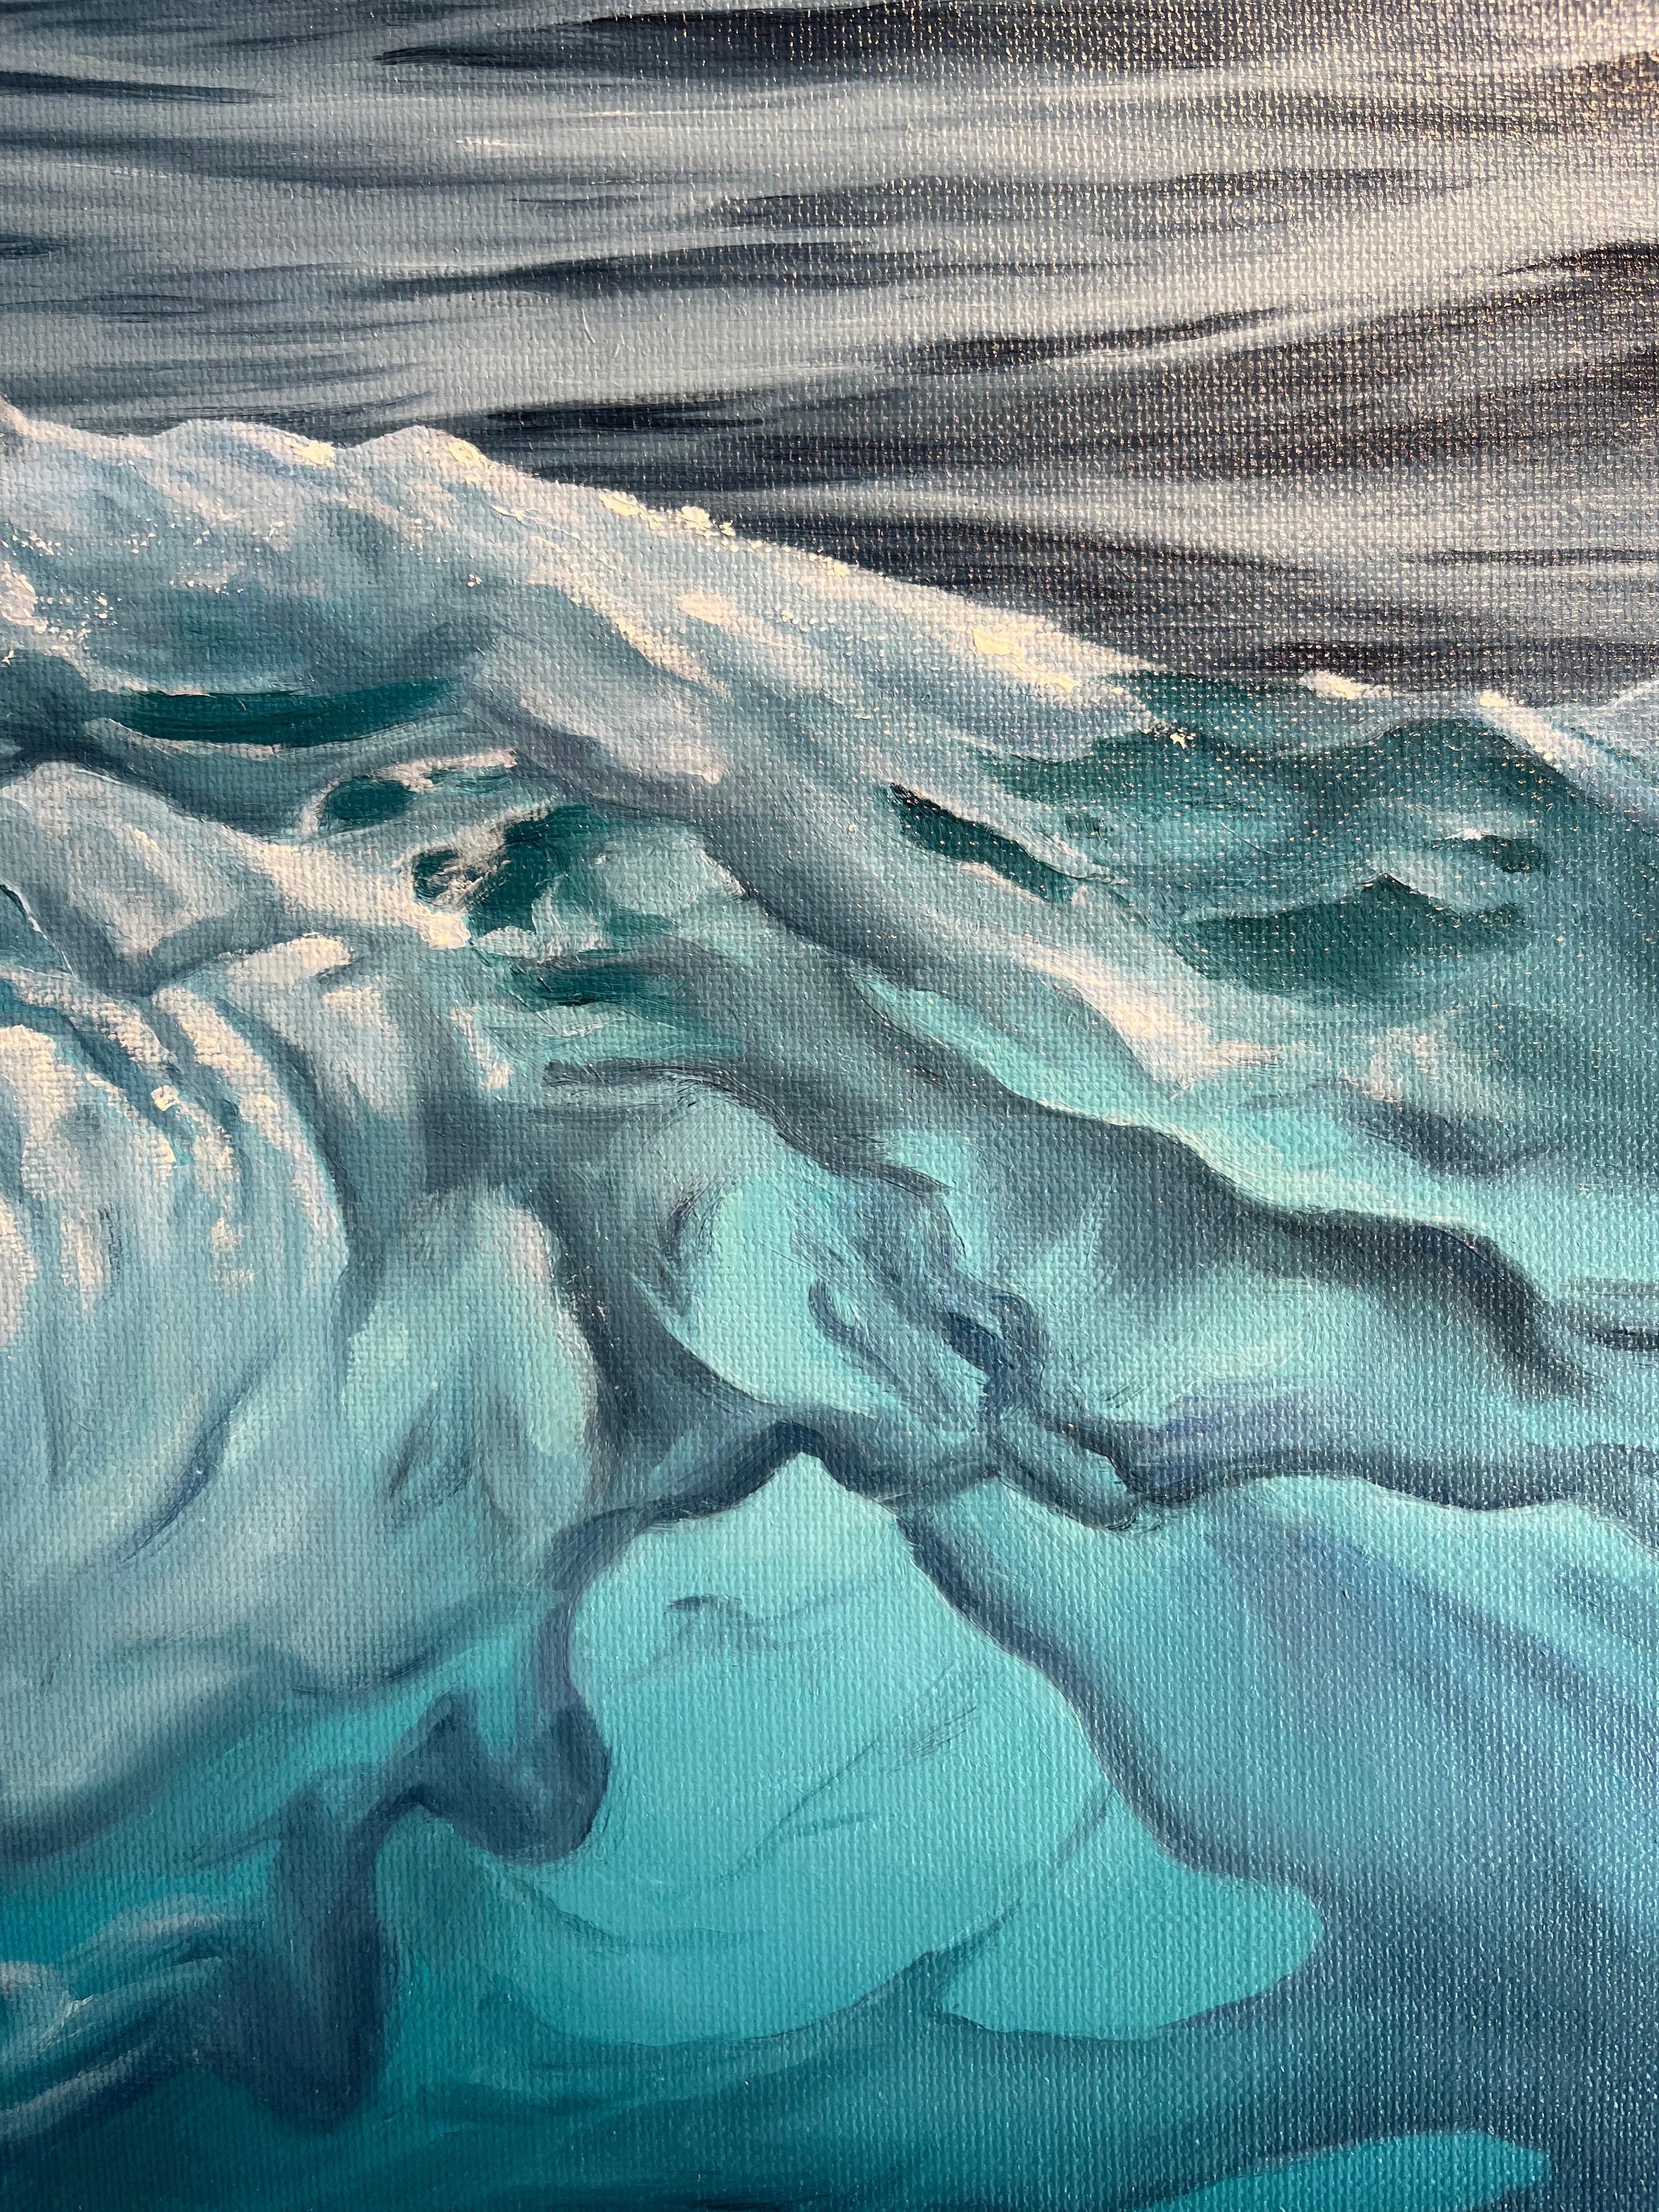 Mediterranean Glow-original realism ocean seascape oil painting-contemporary Art - Painting by Alina Huberenko